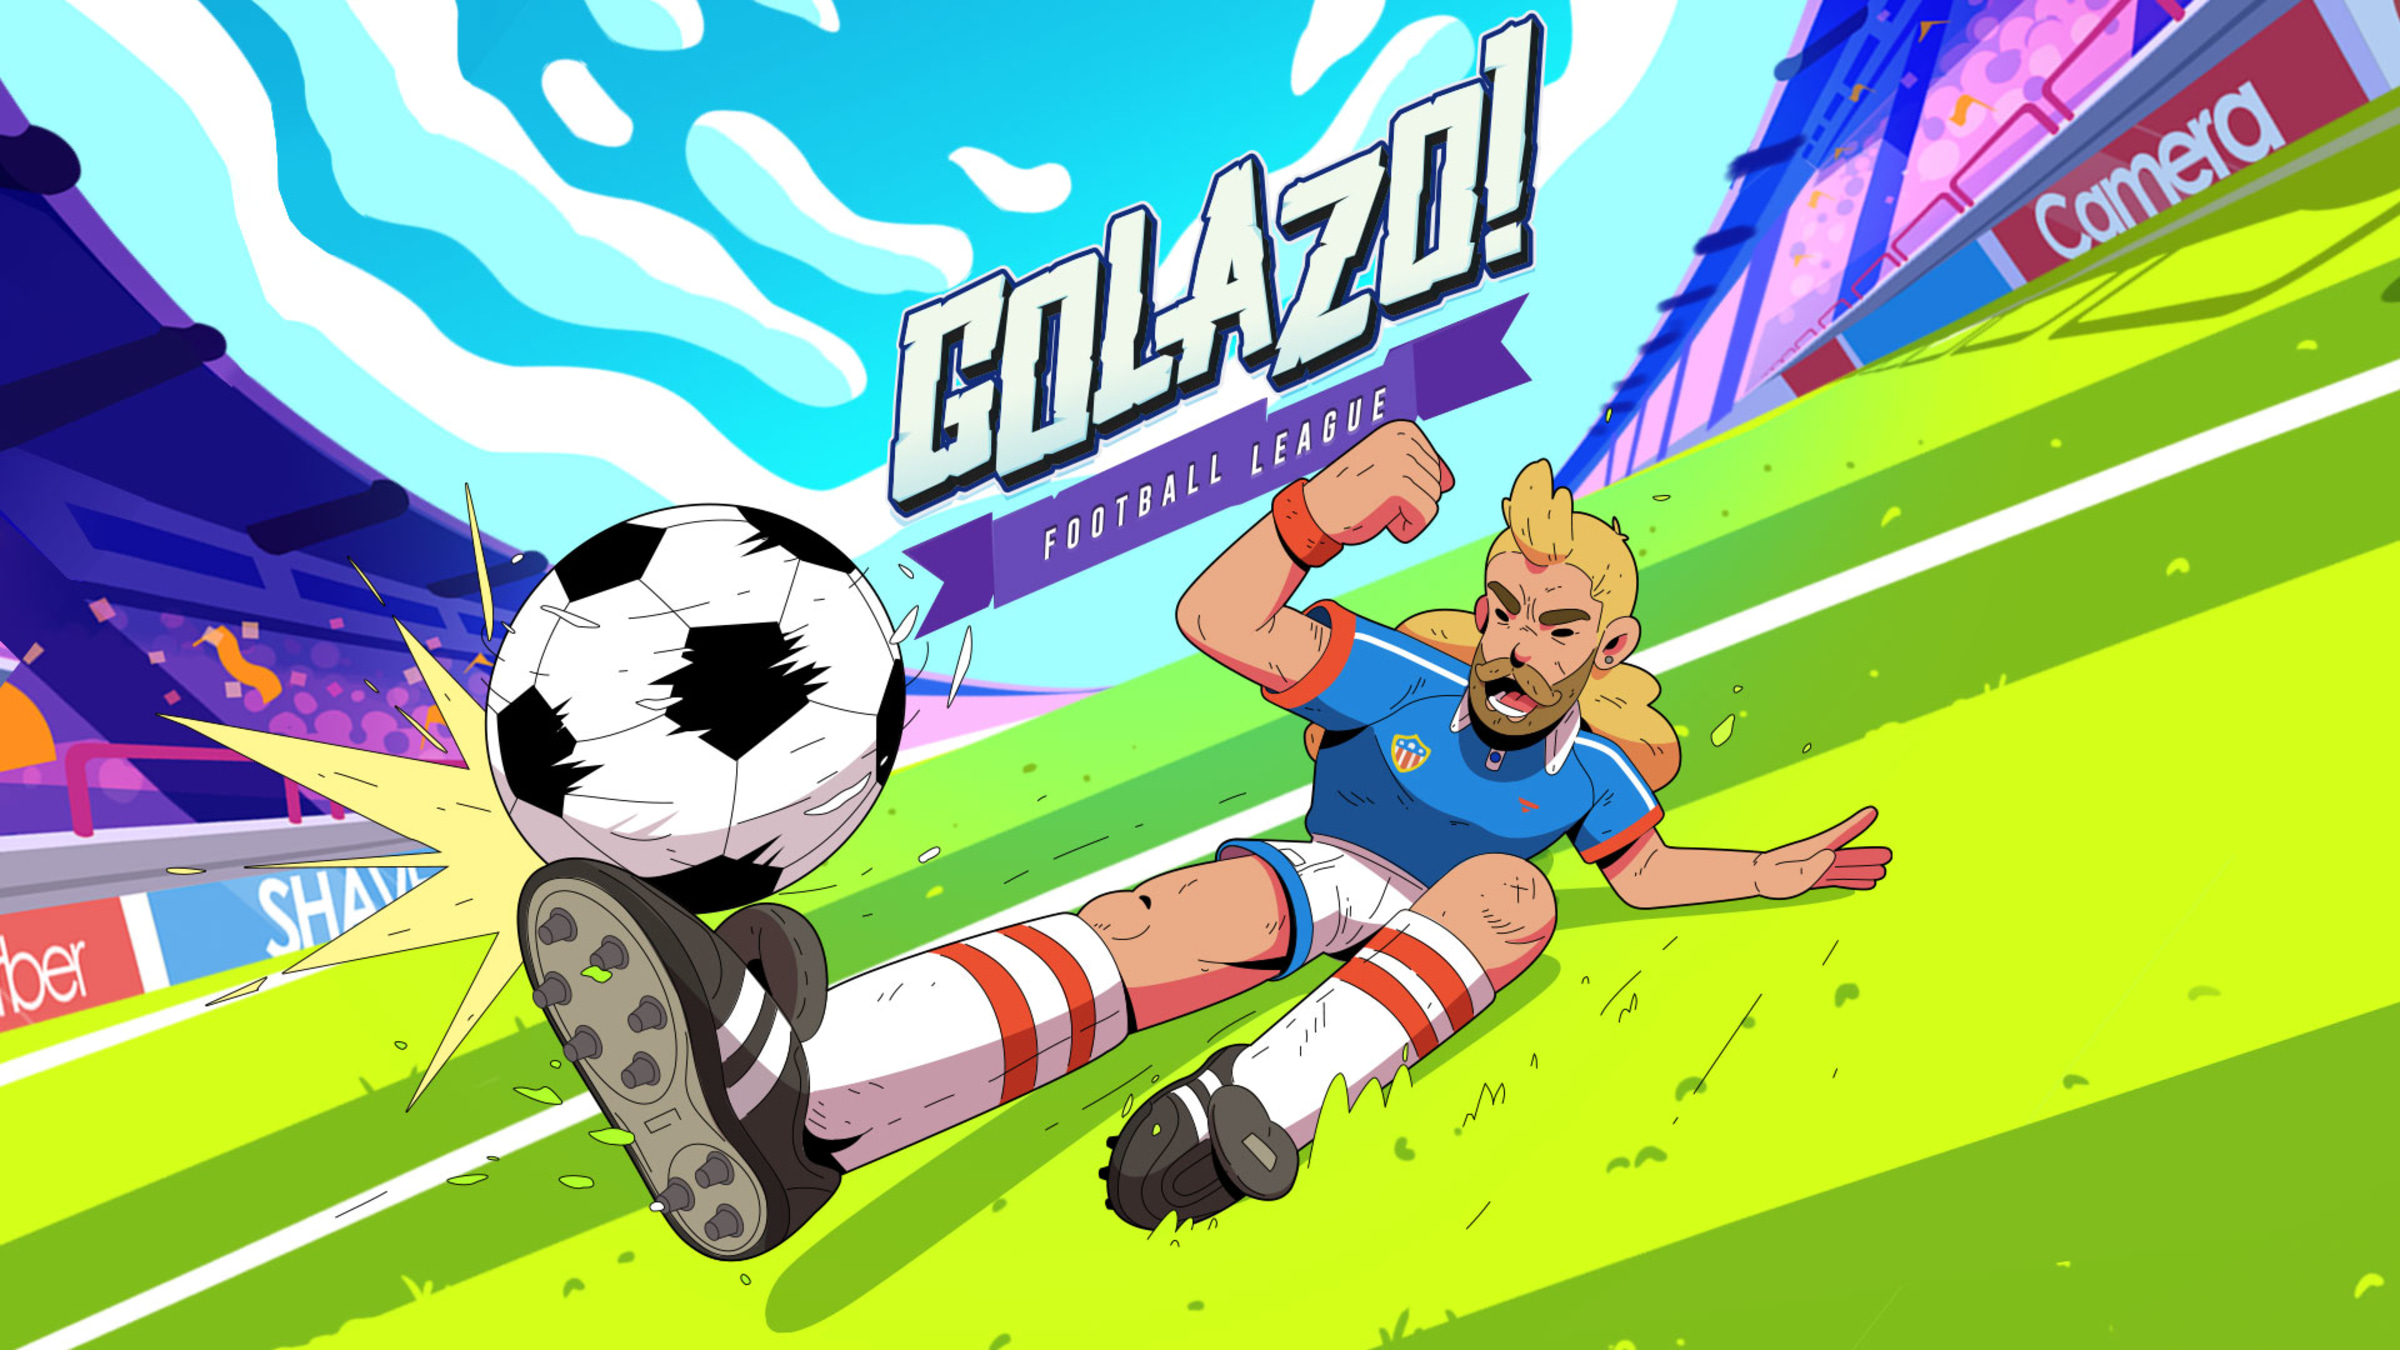 Golazo! For Nintendo Switch - Nintendo Official Site